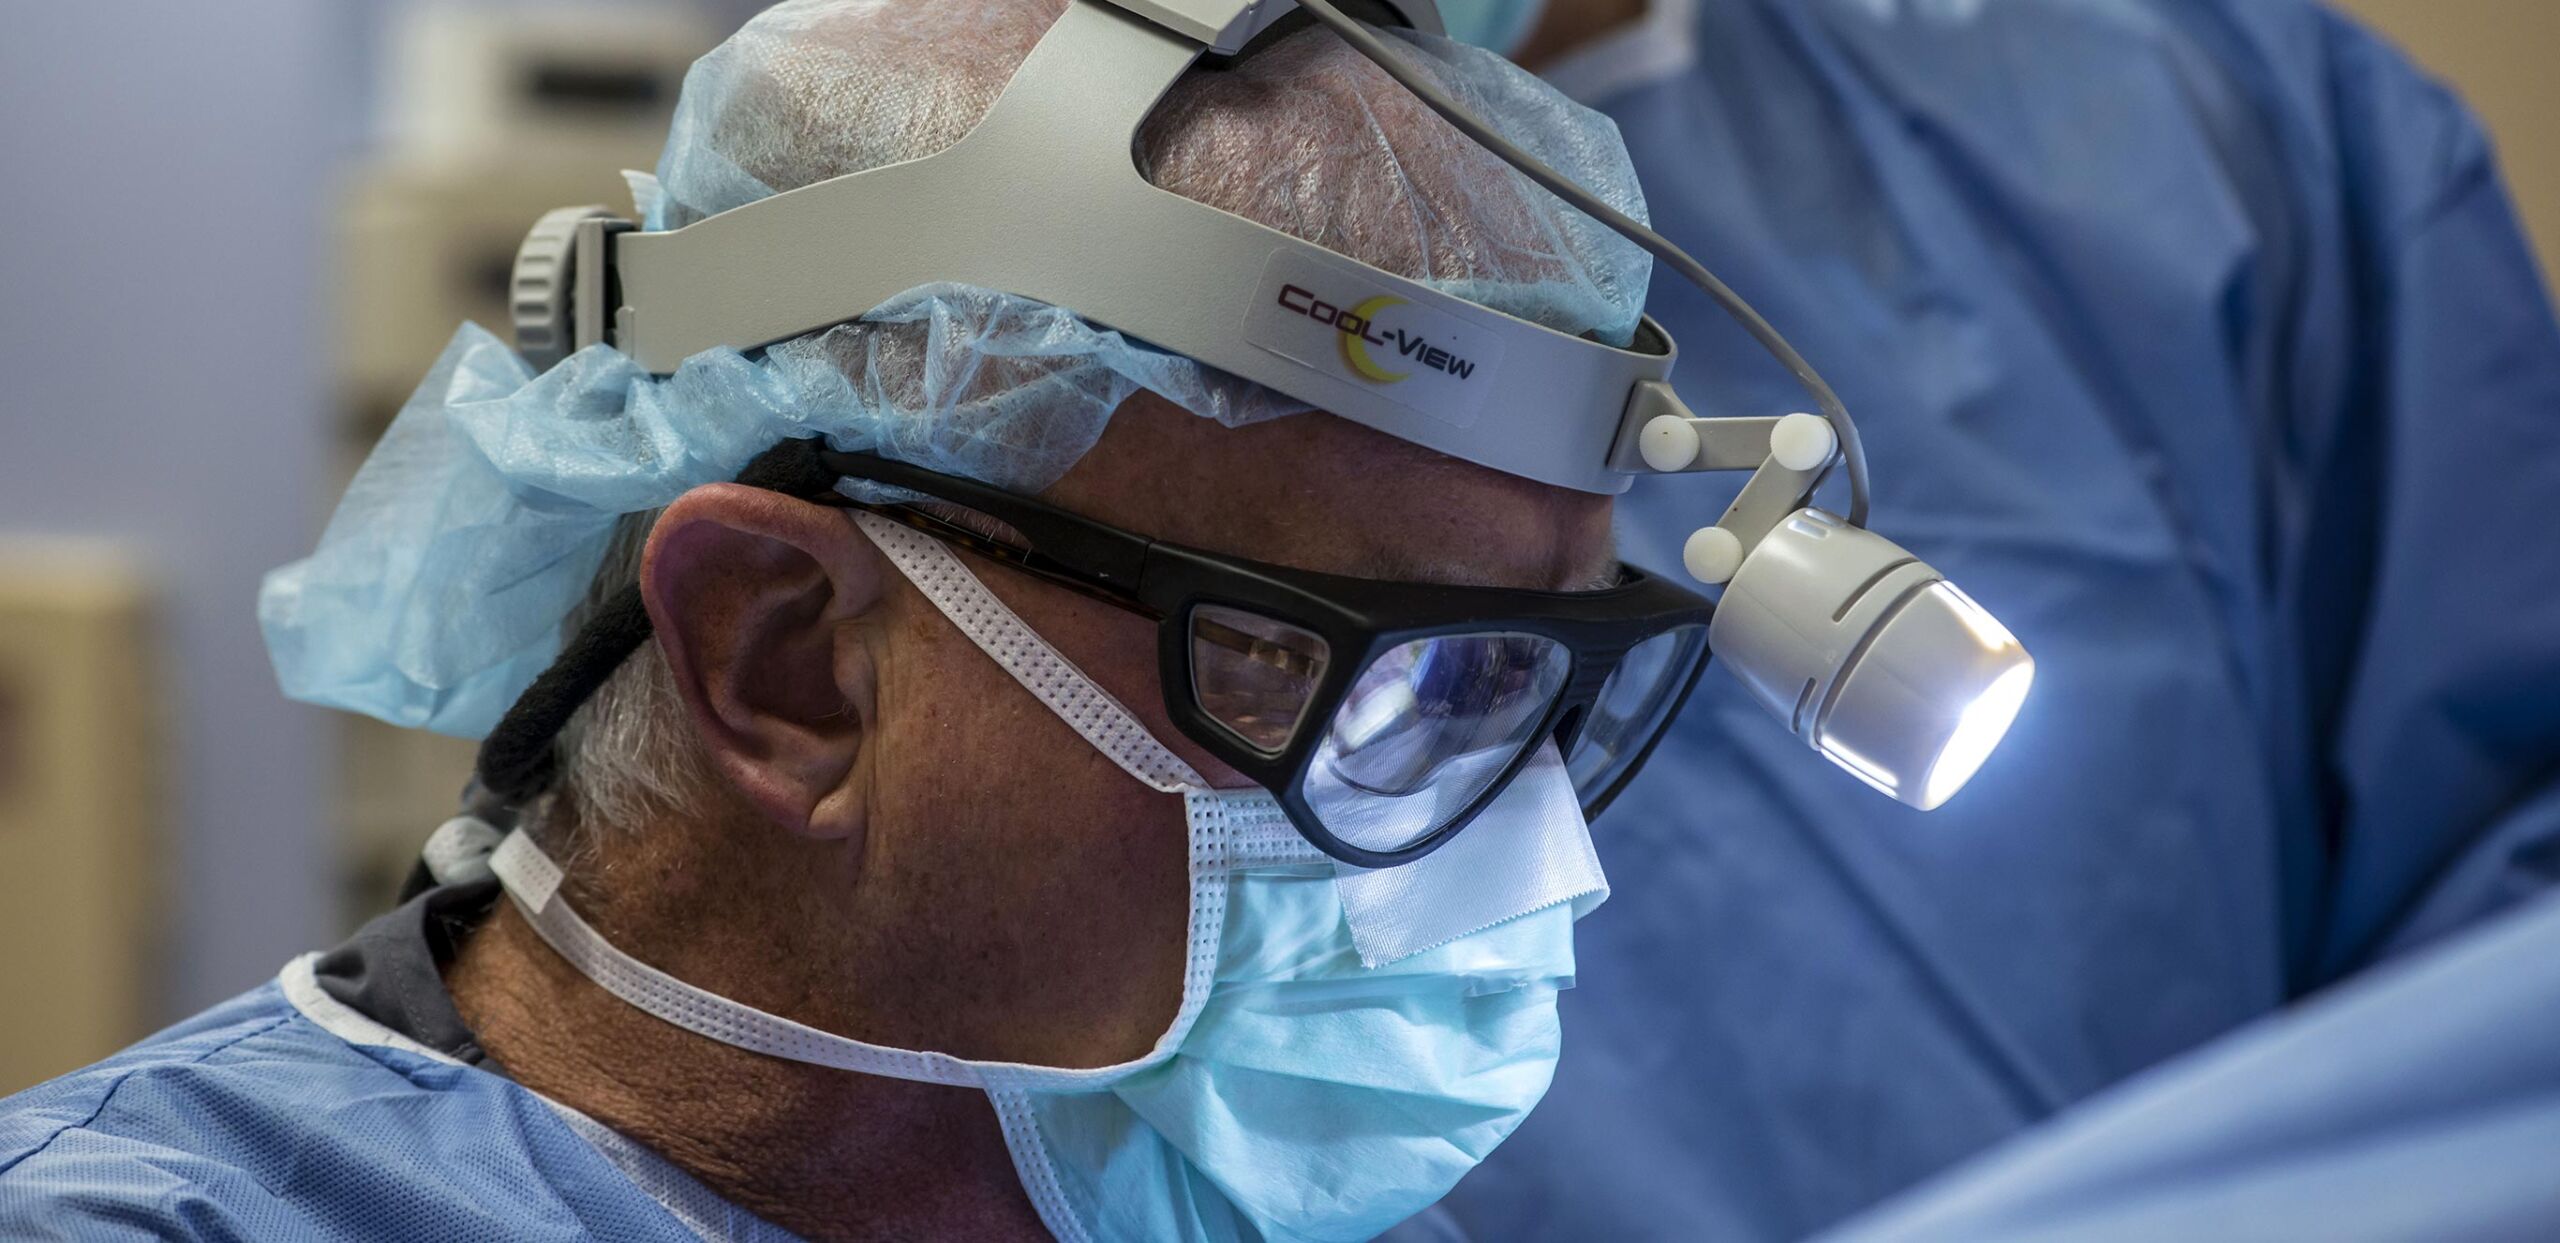 Cardiac surgeon James Kirchhoffer, MD, wears a headlamp while performing cardiac surgery, Cooley Dickinson Medical Group Hampshire Cardiovascular Associates, Northampton, MA 01060.